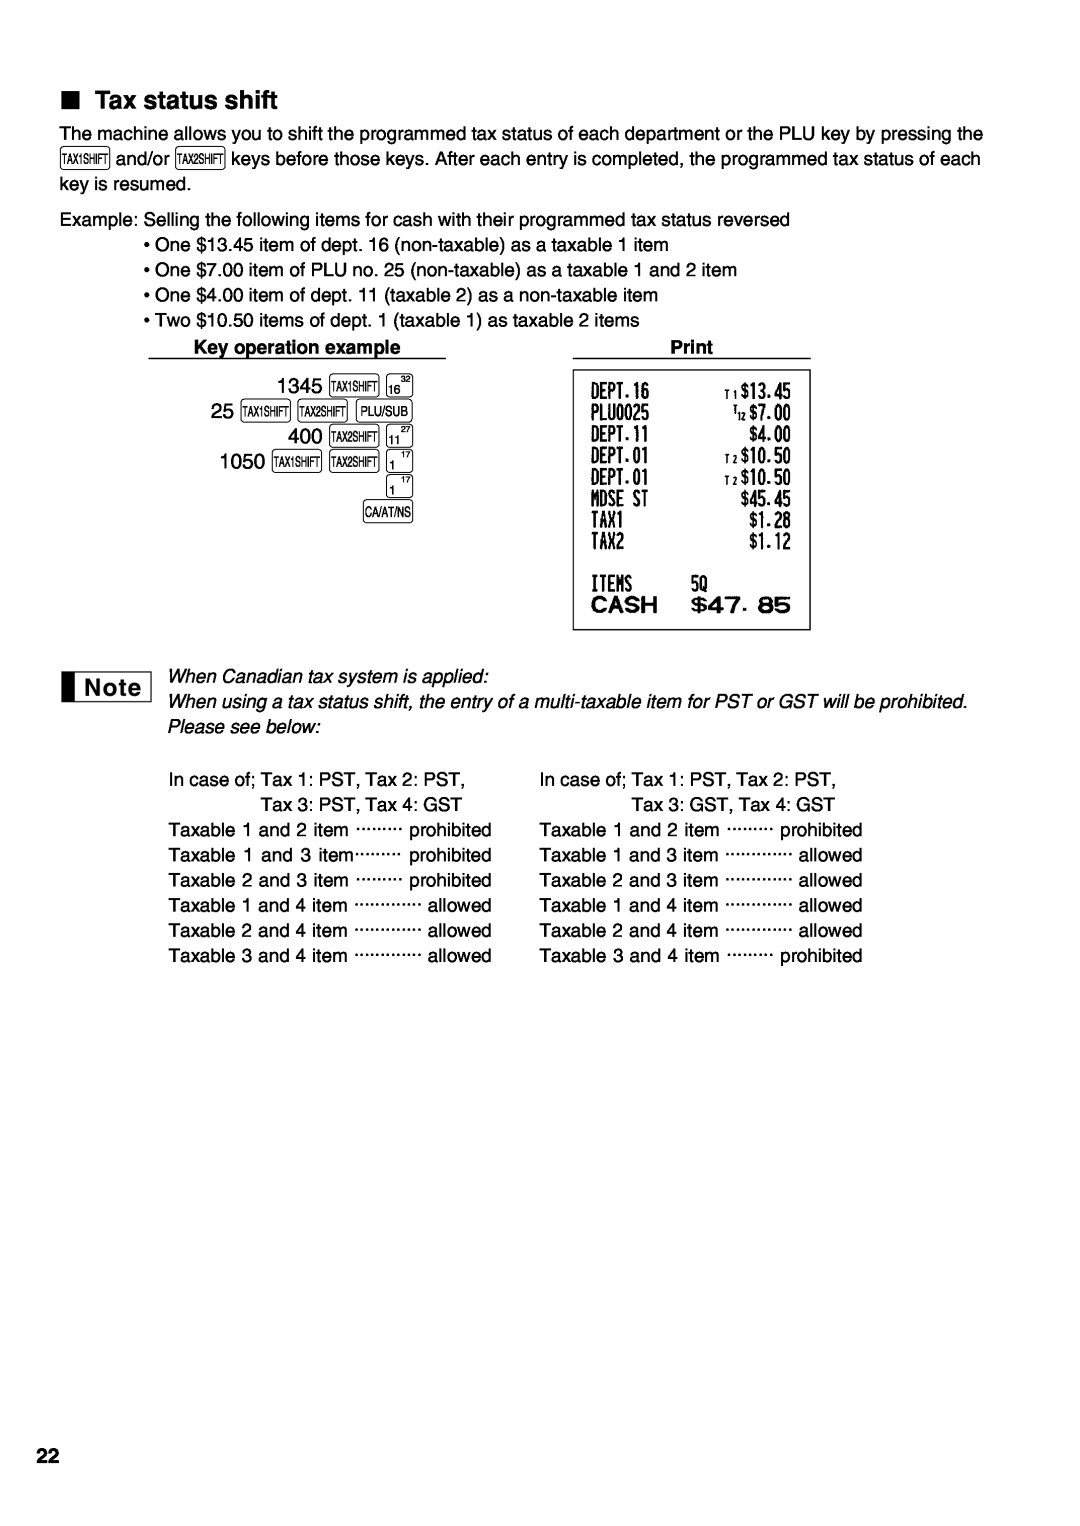 Sharp XE-A21S instruction manual TUp 400 U, Tax status shift, 1345 T, 1050 TU, Key operation example, Print 